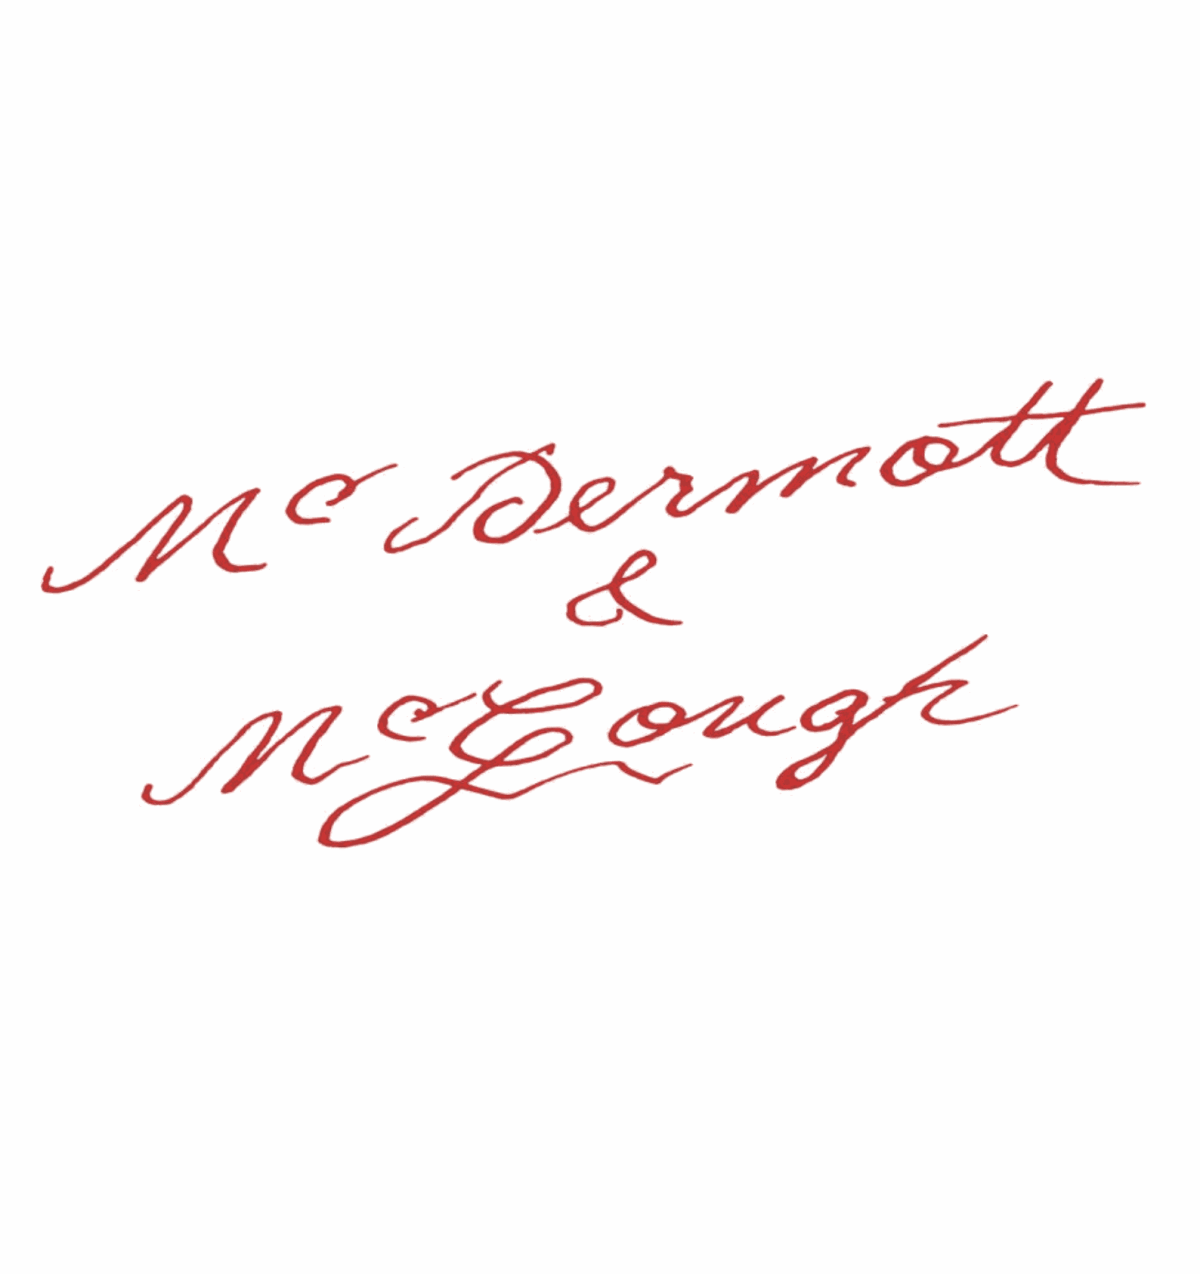 McDermott & McGough